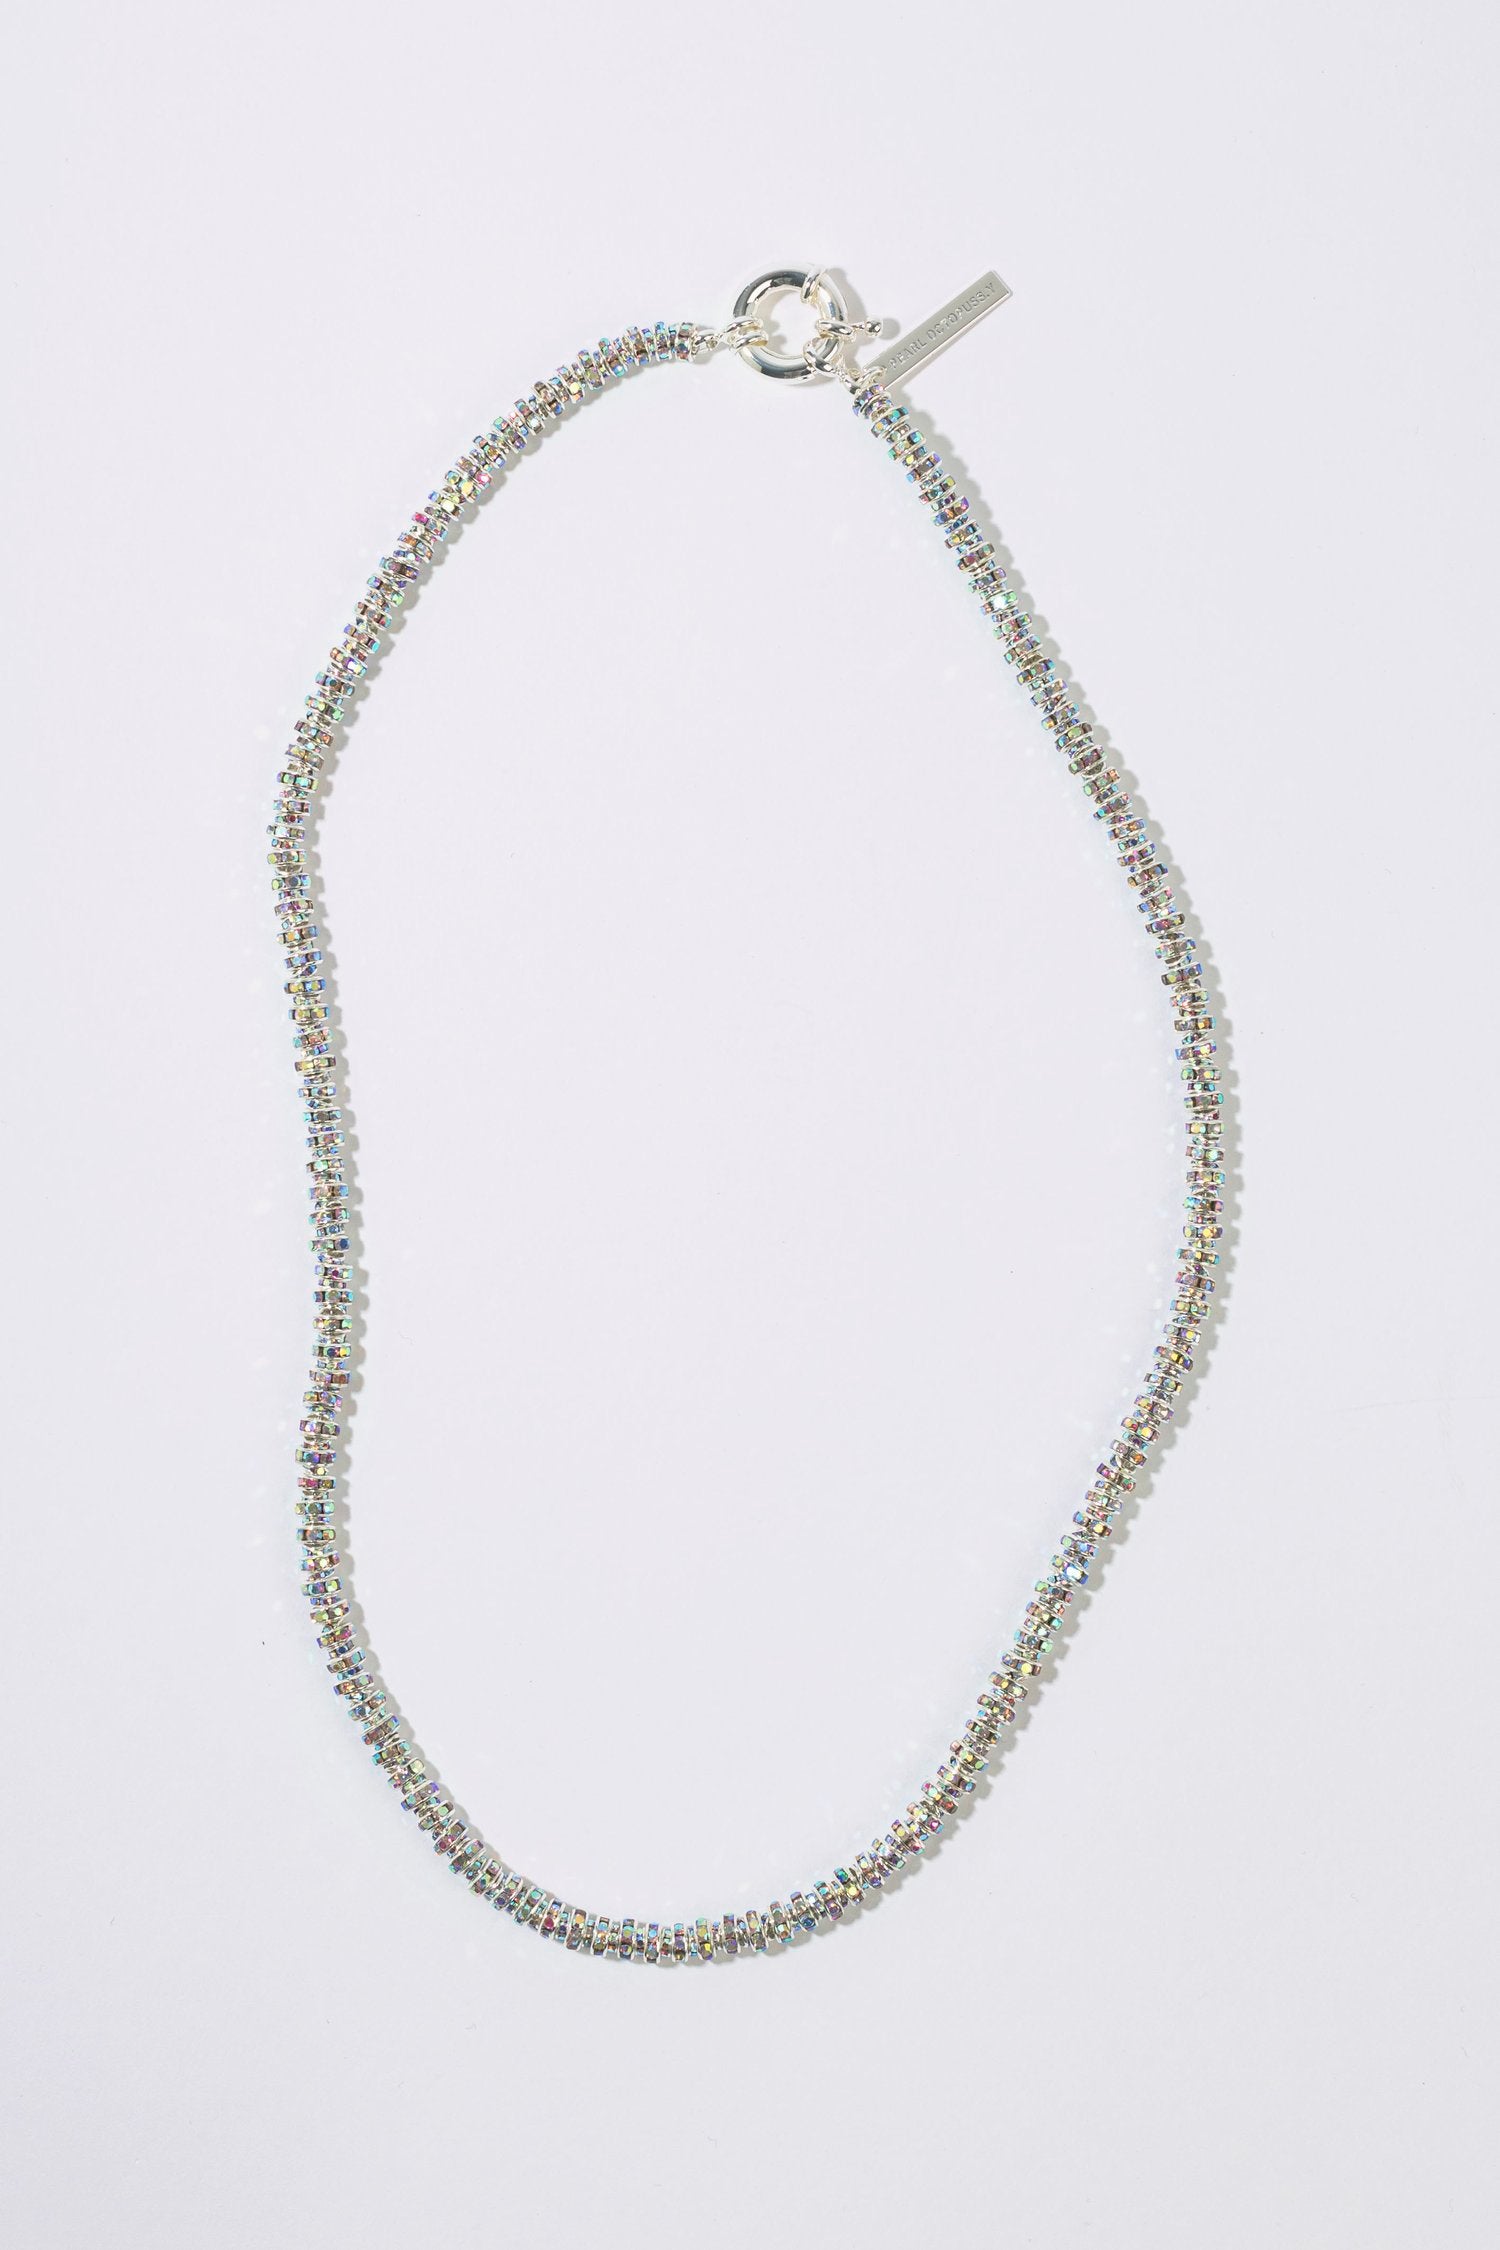 SKINNY DIAMOND necklace (45 cm)